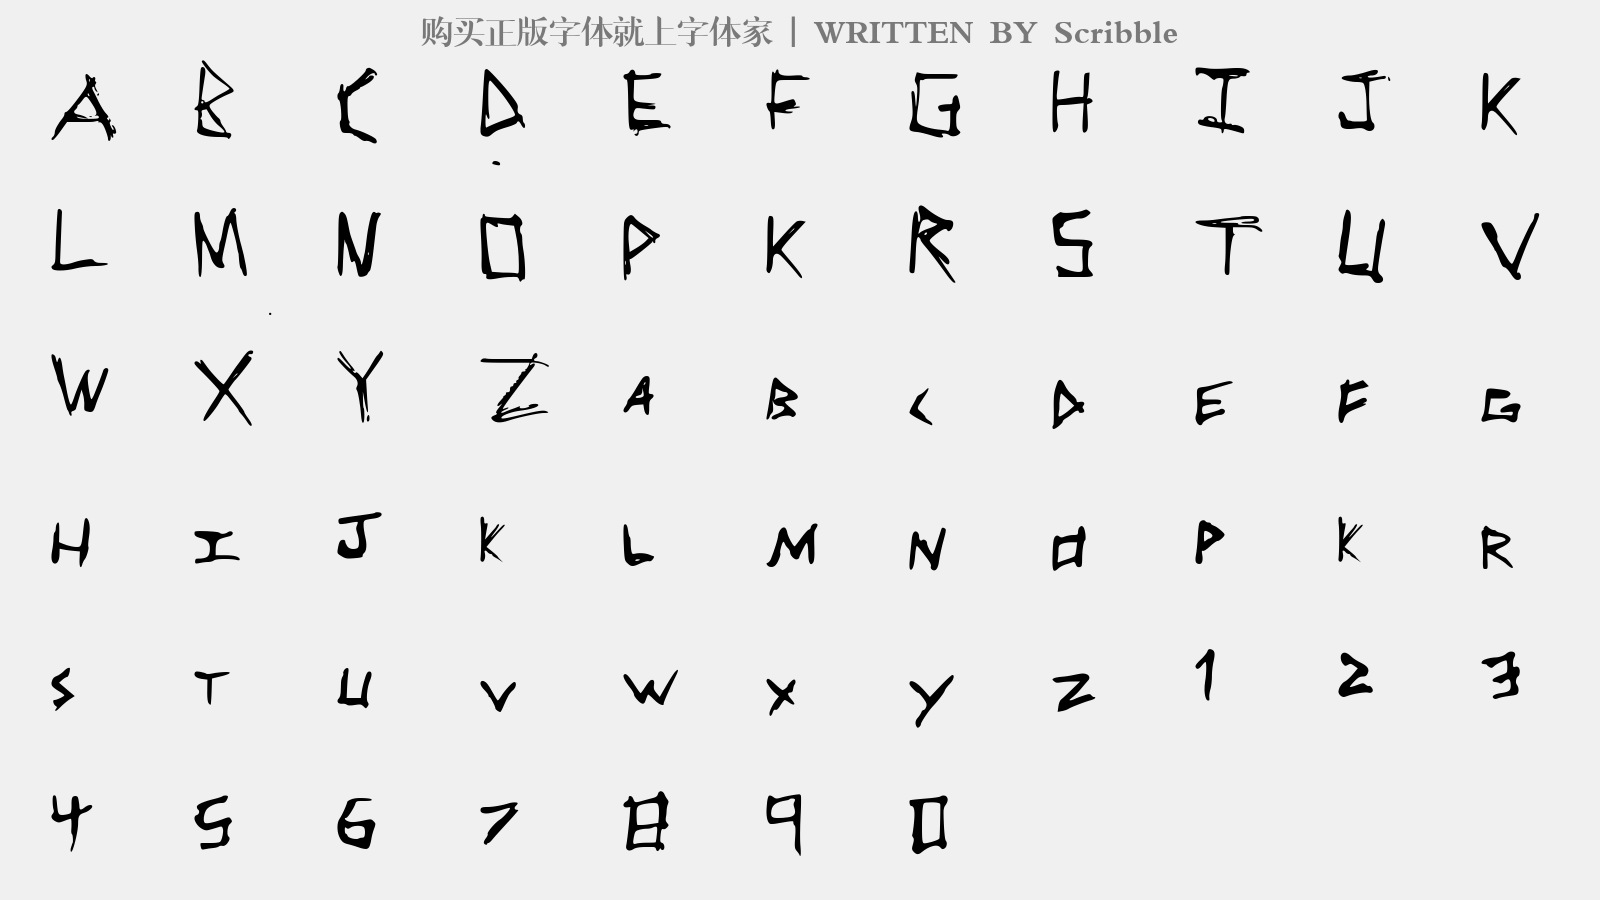 Scribble - 大写字母/小写字母/数字